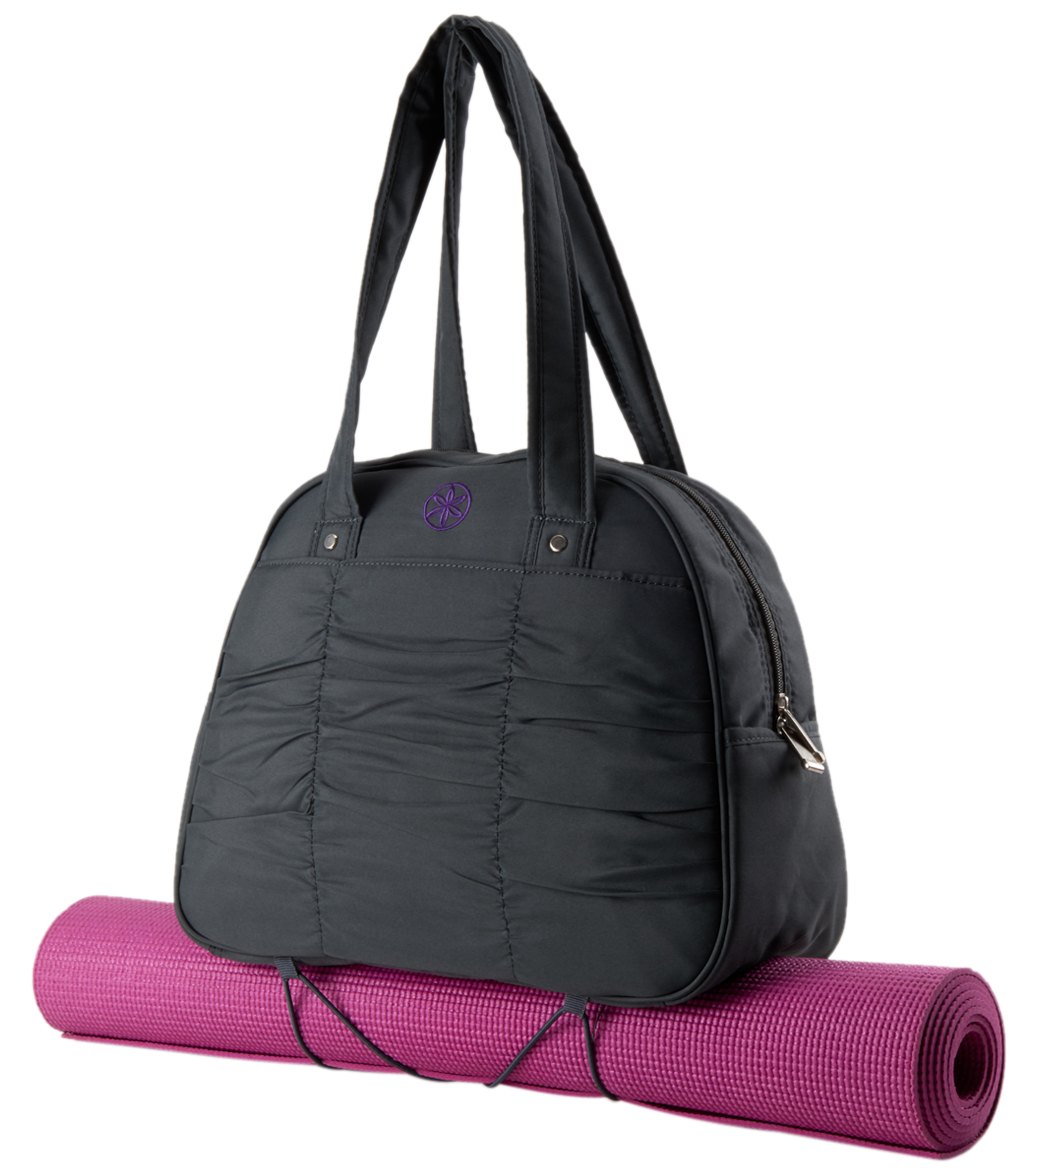 Hugger Mugger Quilted Yoga Mat Bag Black - fits Most One Size